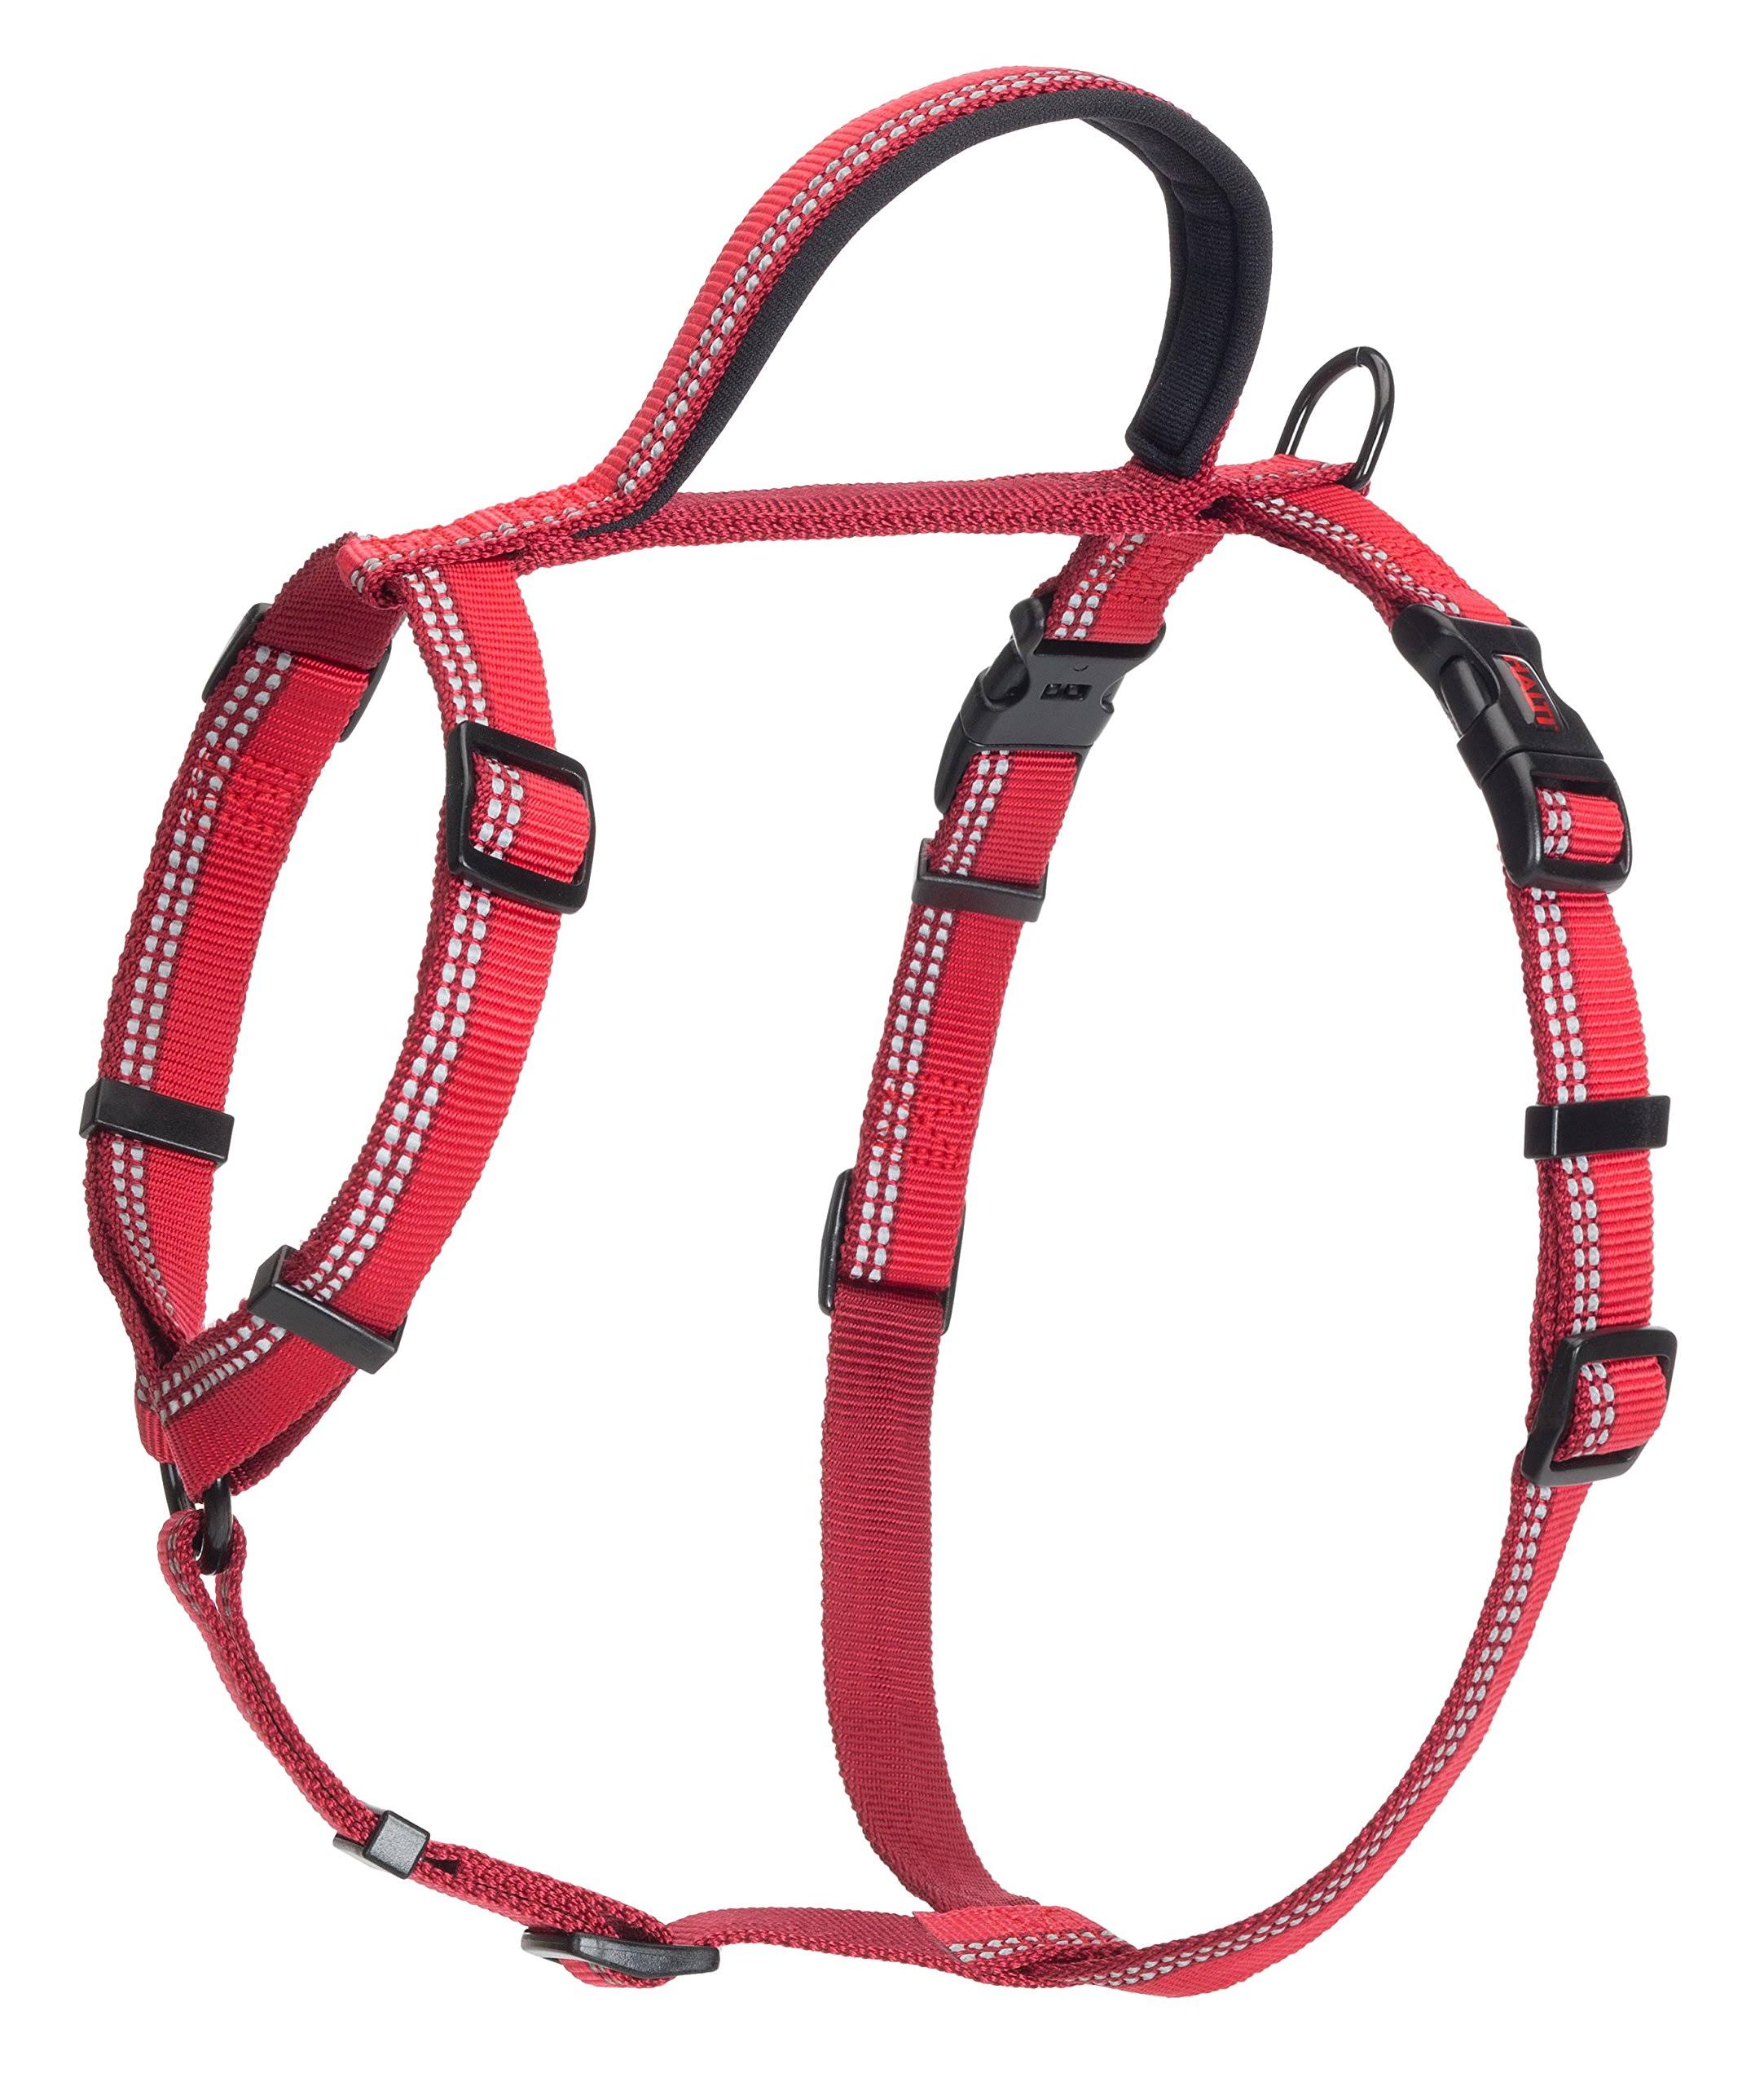 The Company of Animals Halti Nylon Walking Dog Harness - Red, Medium, 56-76cm